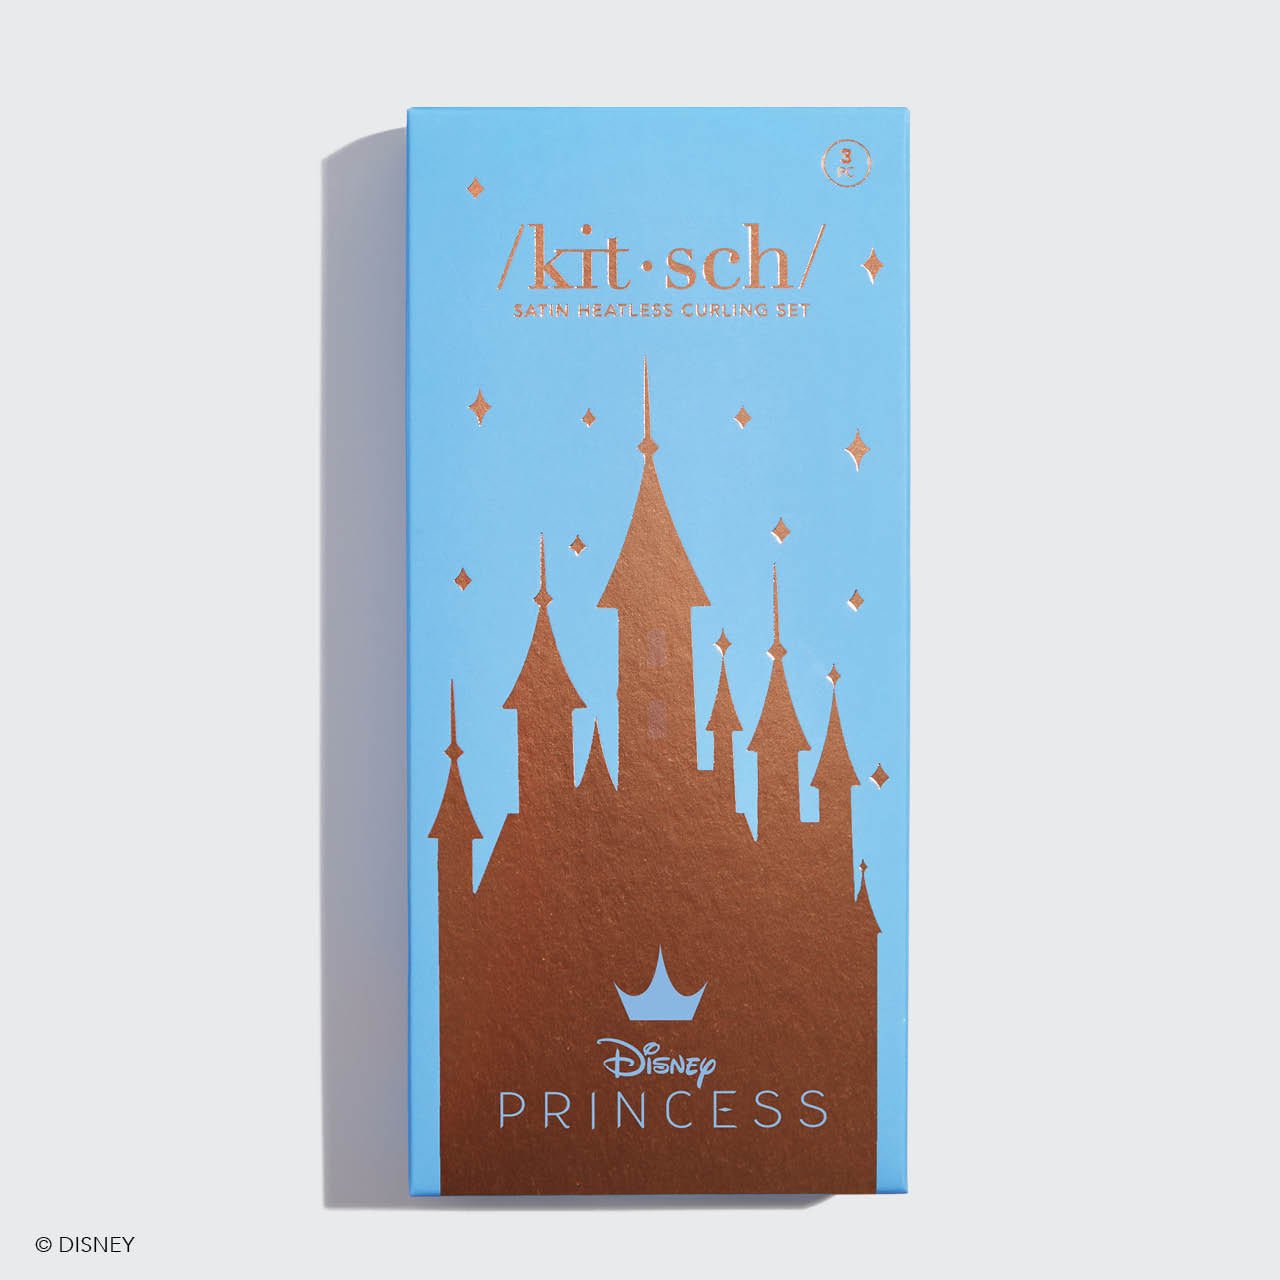 Kitsch & Disney Satin Heatless Σετ για μπούκλες χωρίς θερμότητα - Princess Party